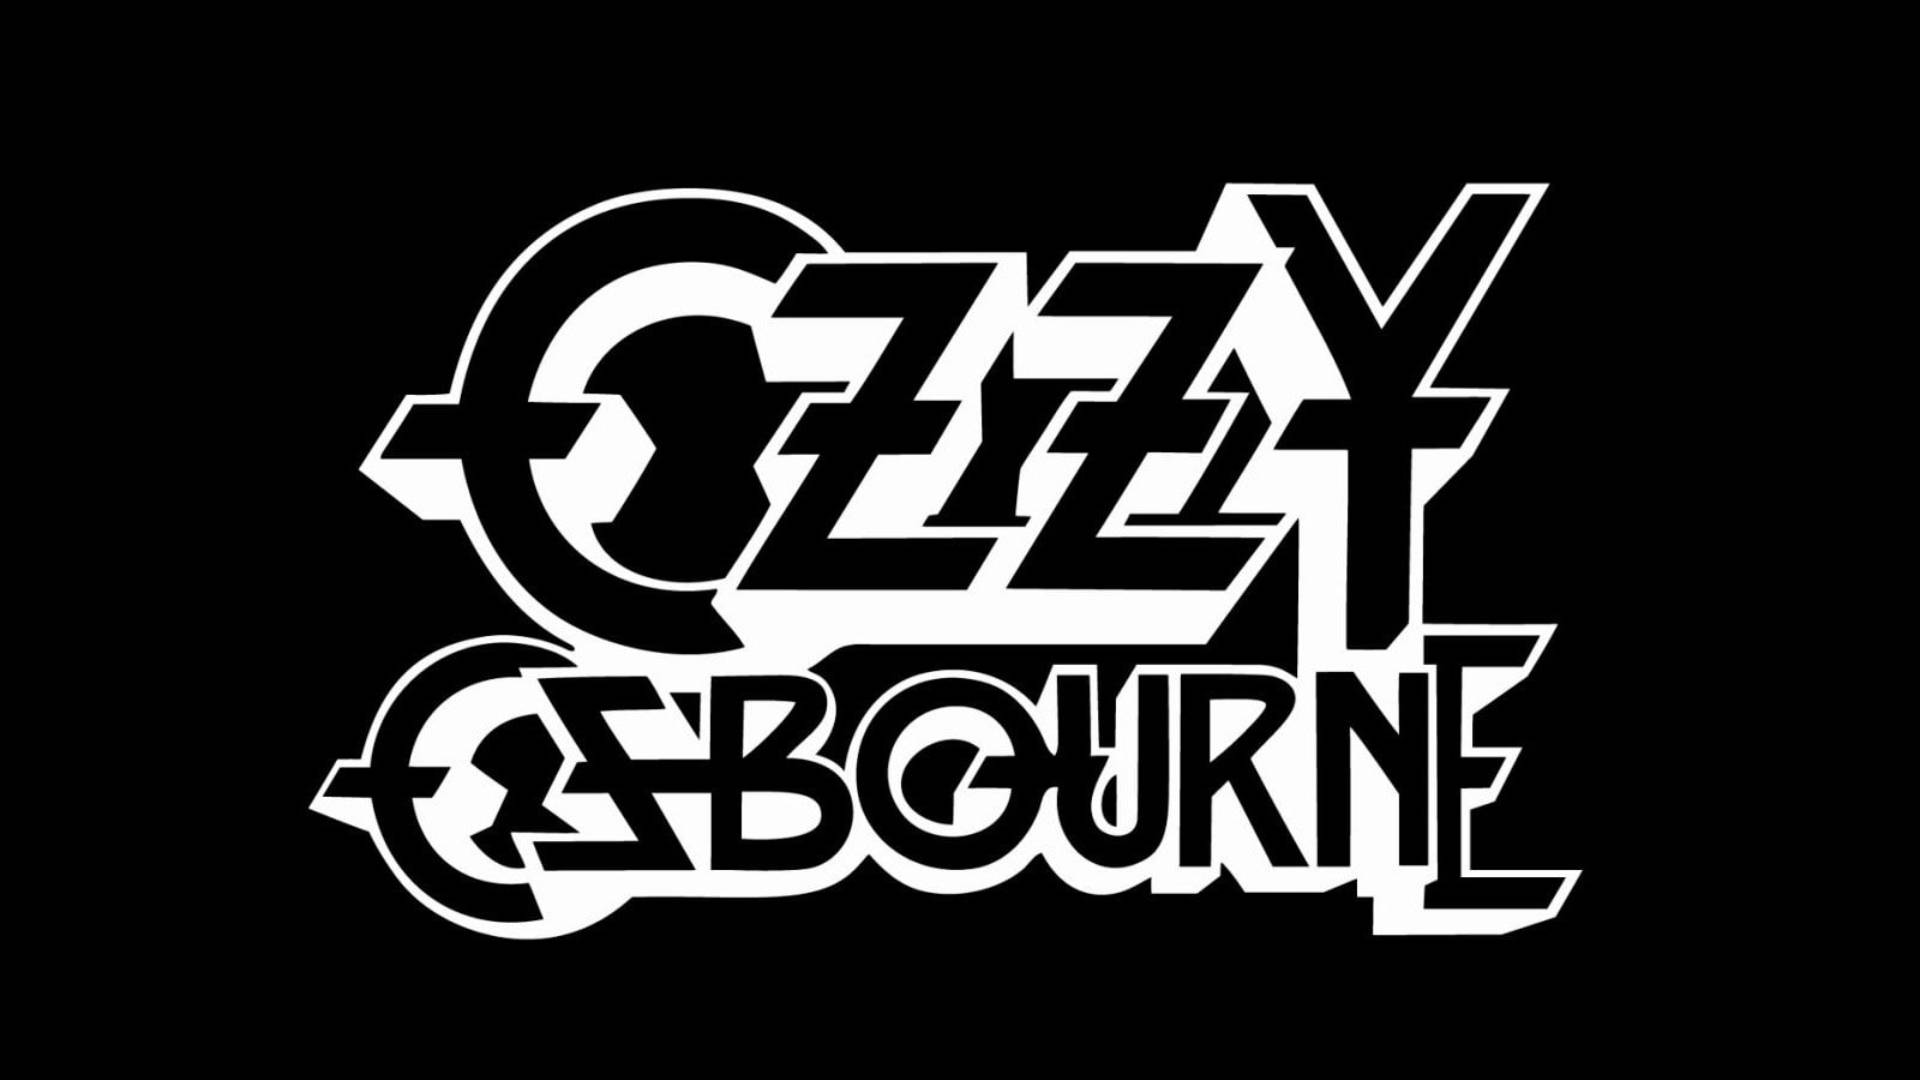 Ozzy Osbourne Banner Background